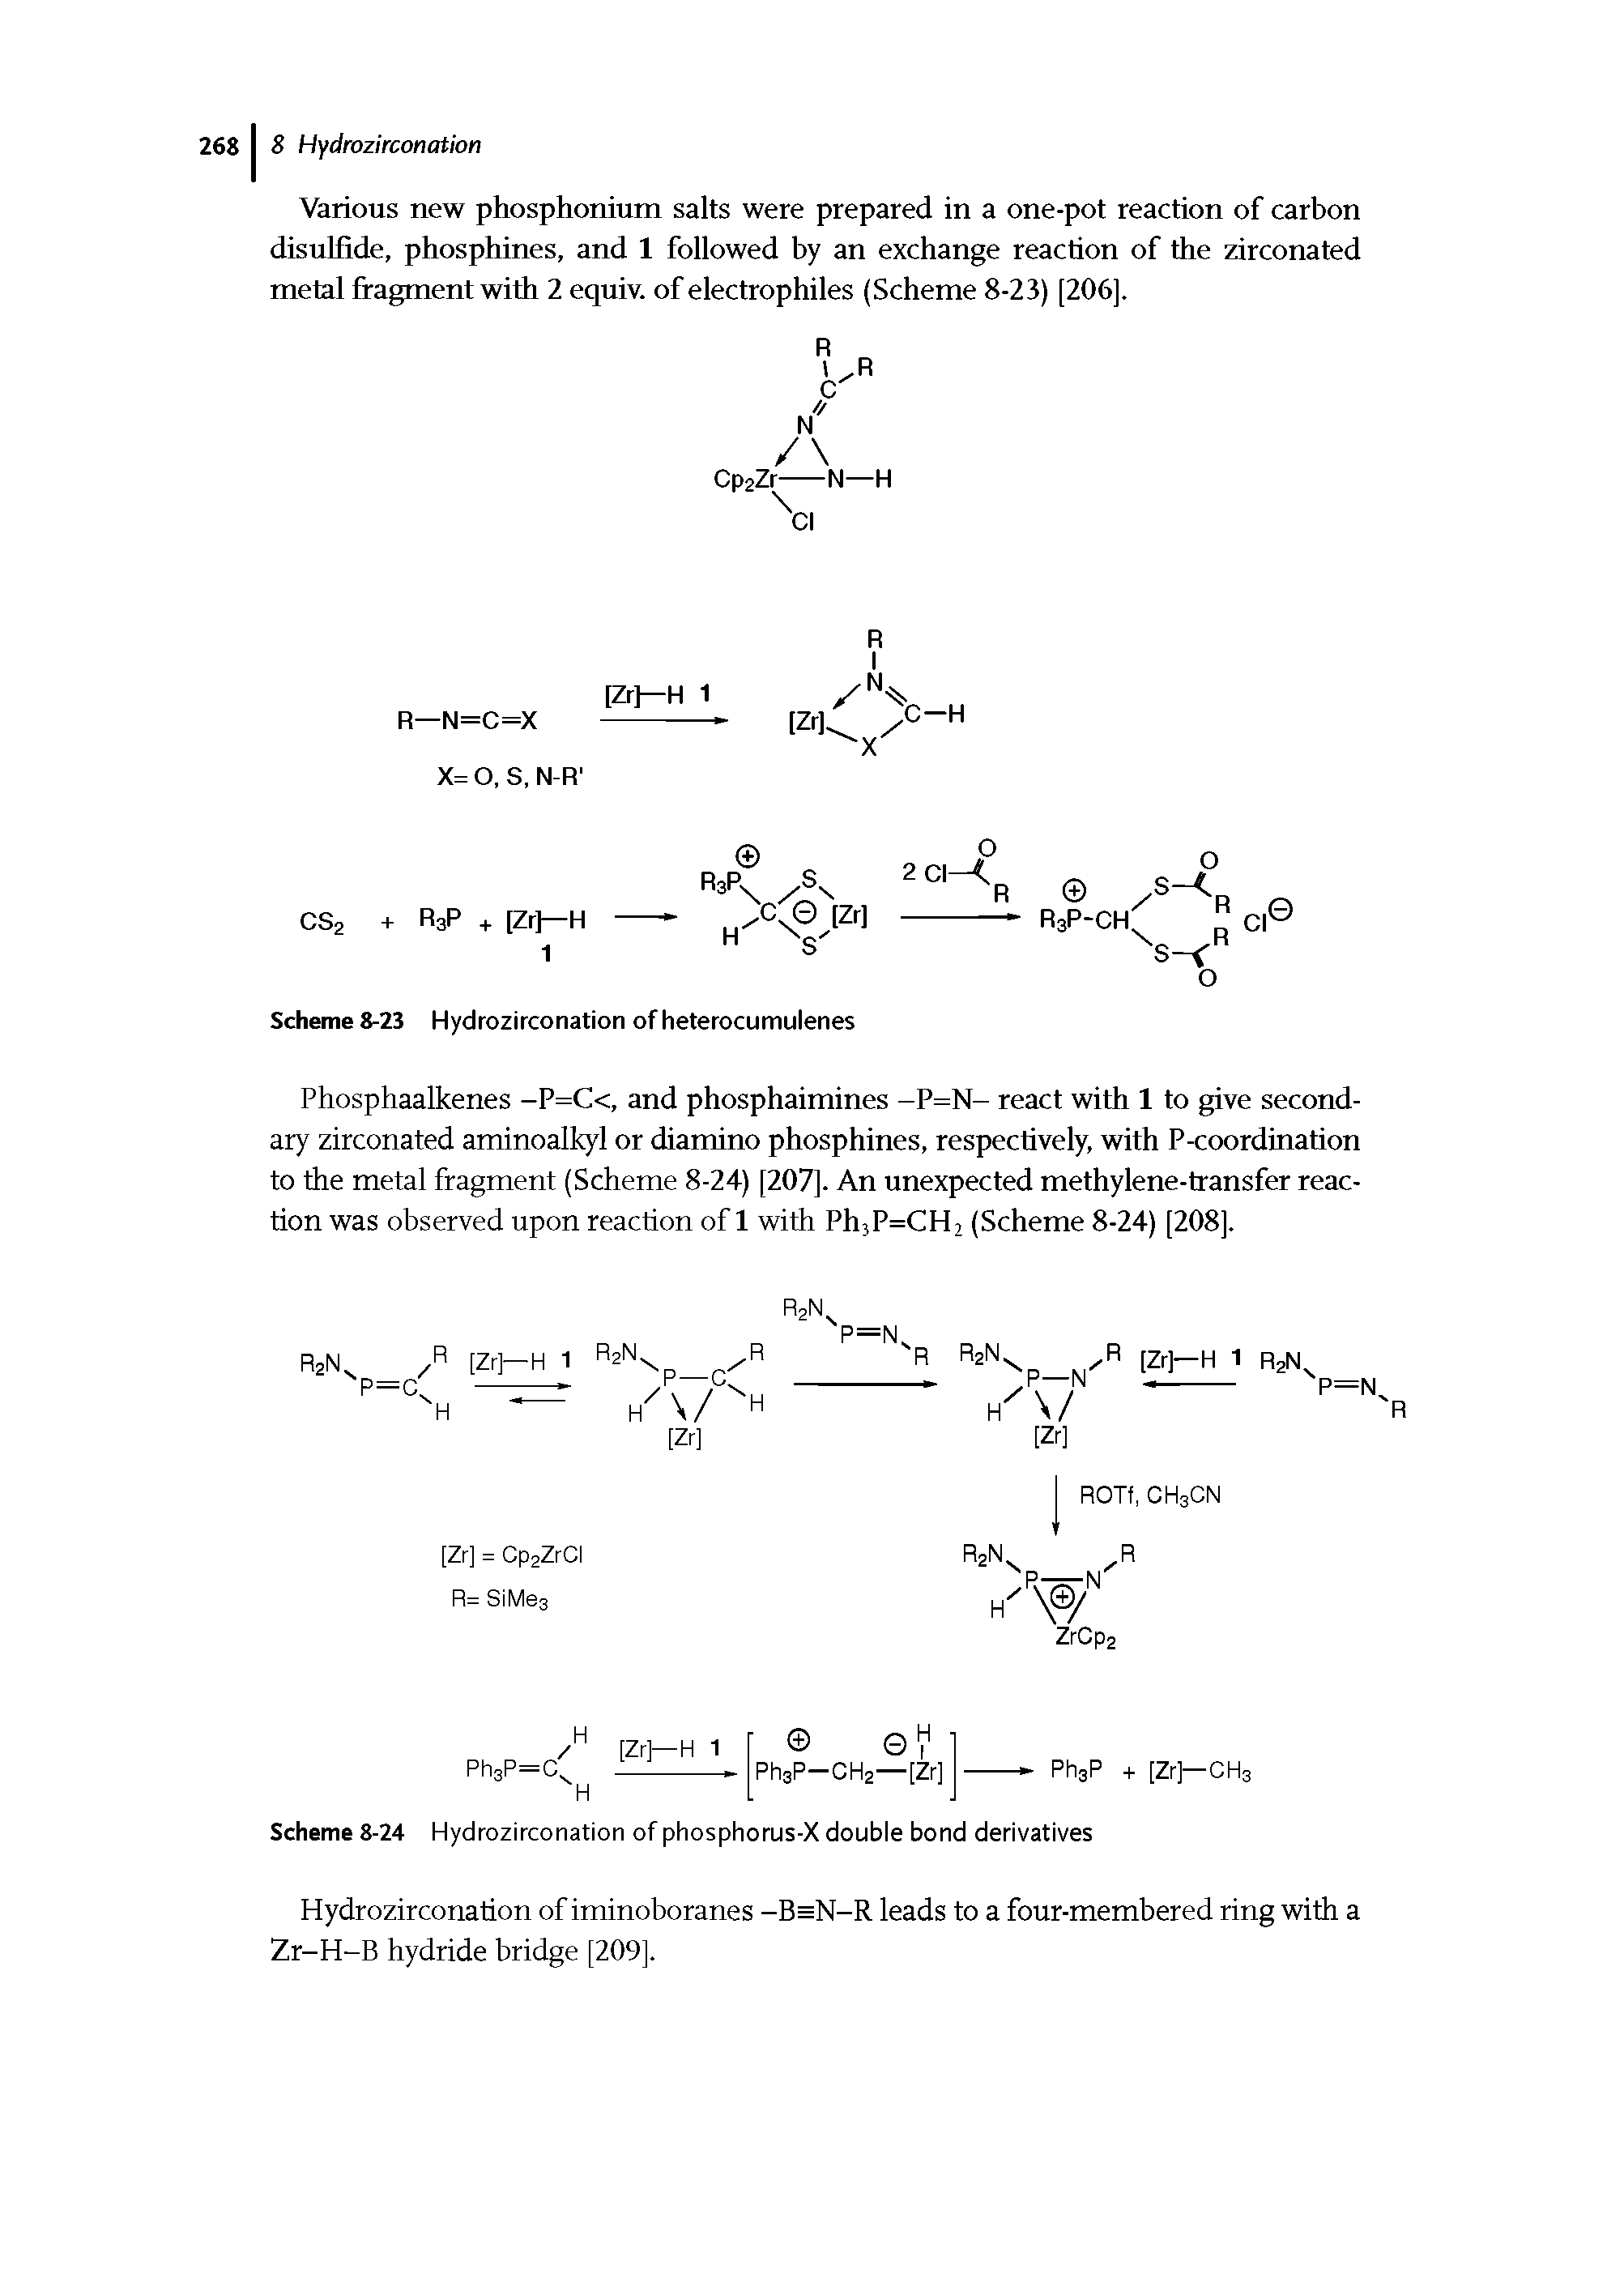 Scheme 8-24 Hydrozirconation of phosphorus-X double bond derivatives...